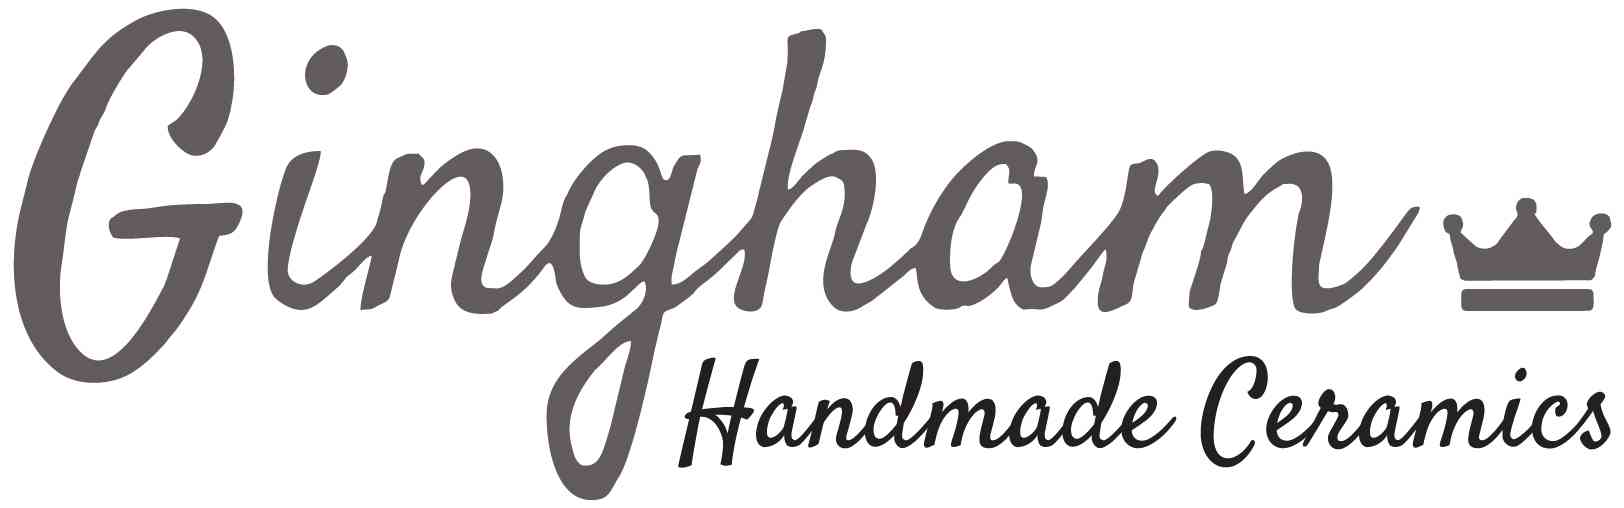 Gingham Handmade Ceramics